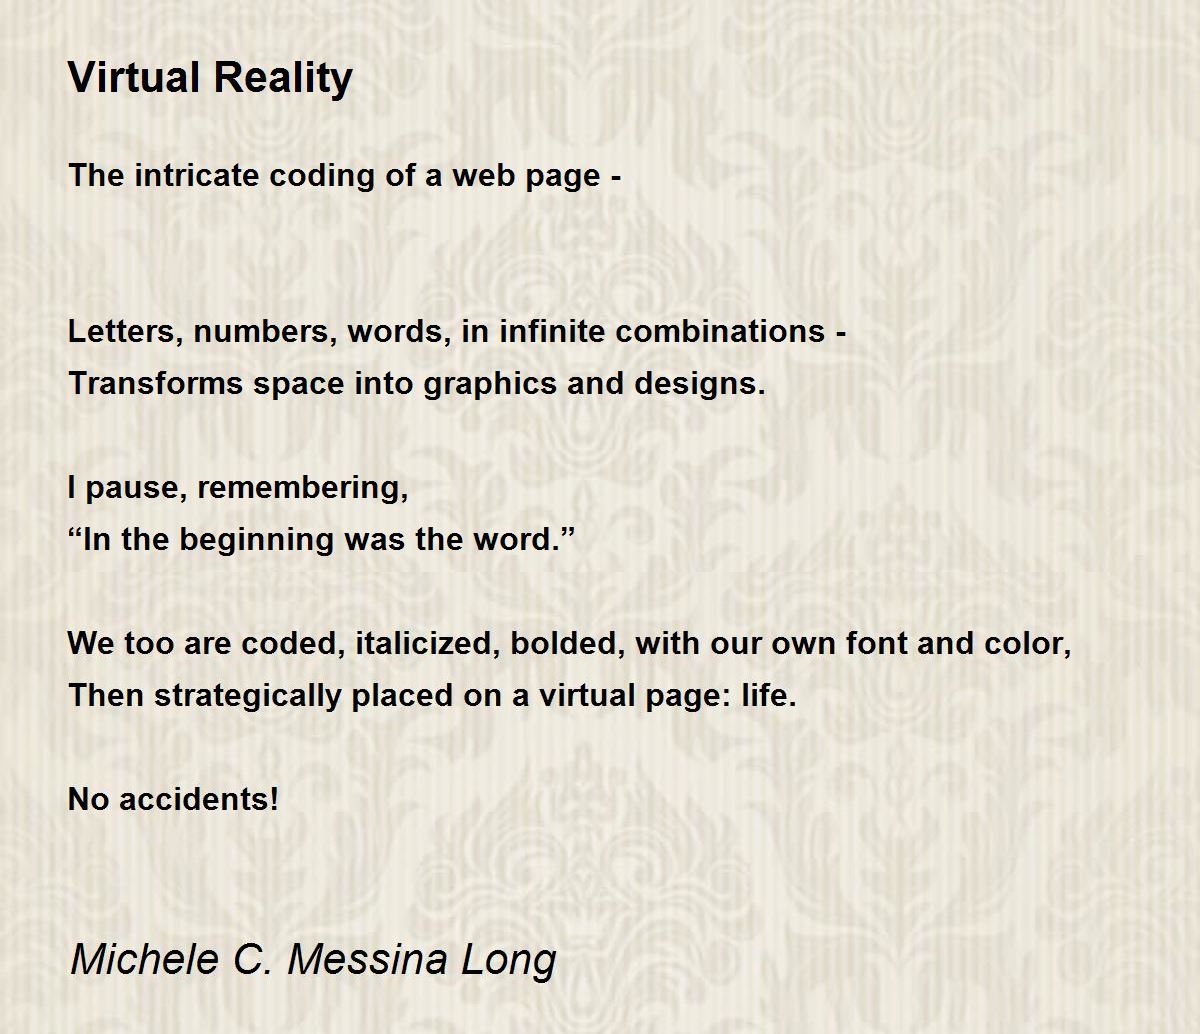 essay on virtual reality technology